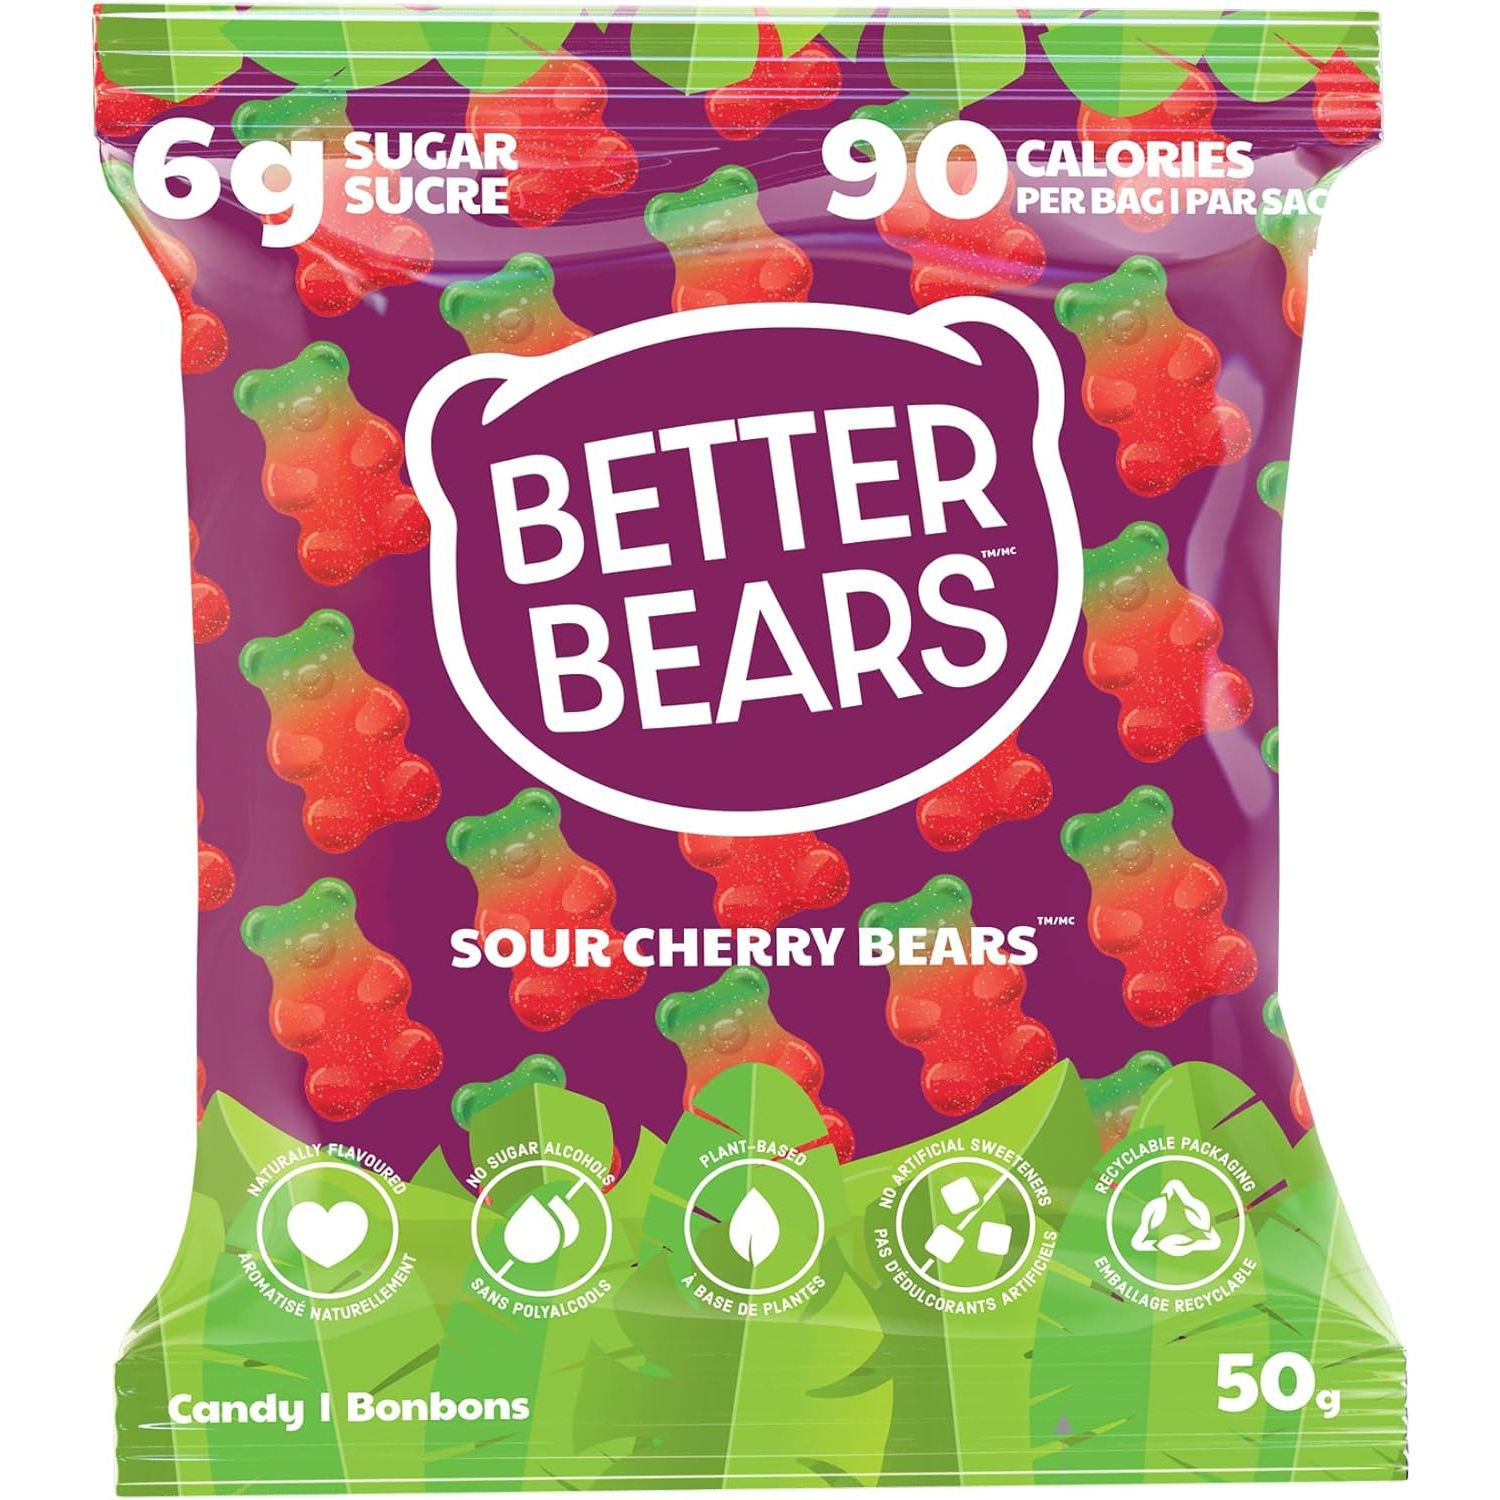 Better Bears Low Sugar Vegan Gummies (1 bag) Protein Snacks Sour Cherry Bears Better Bears